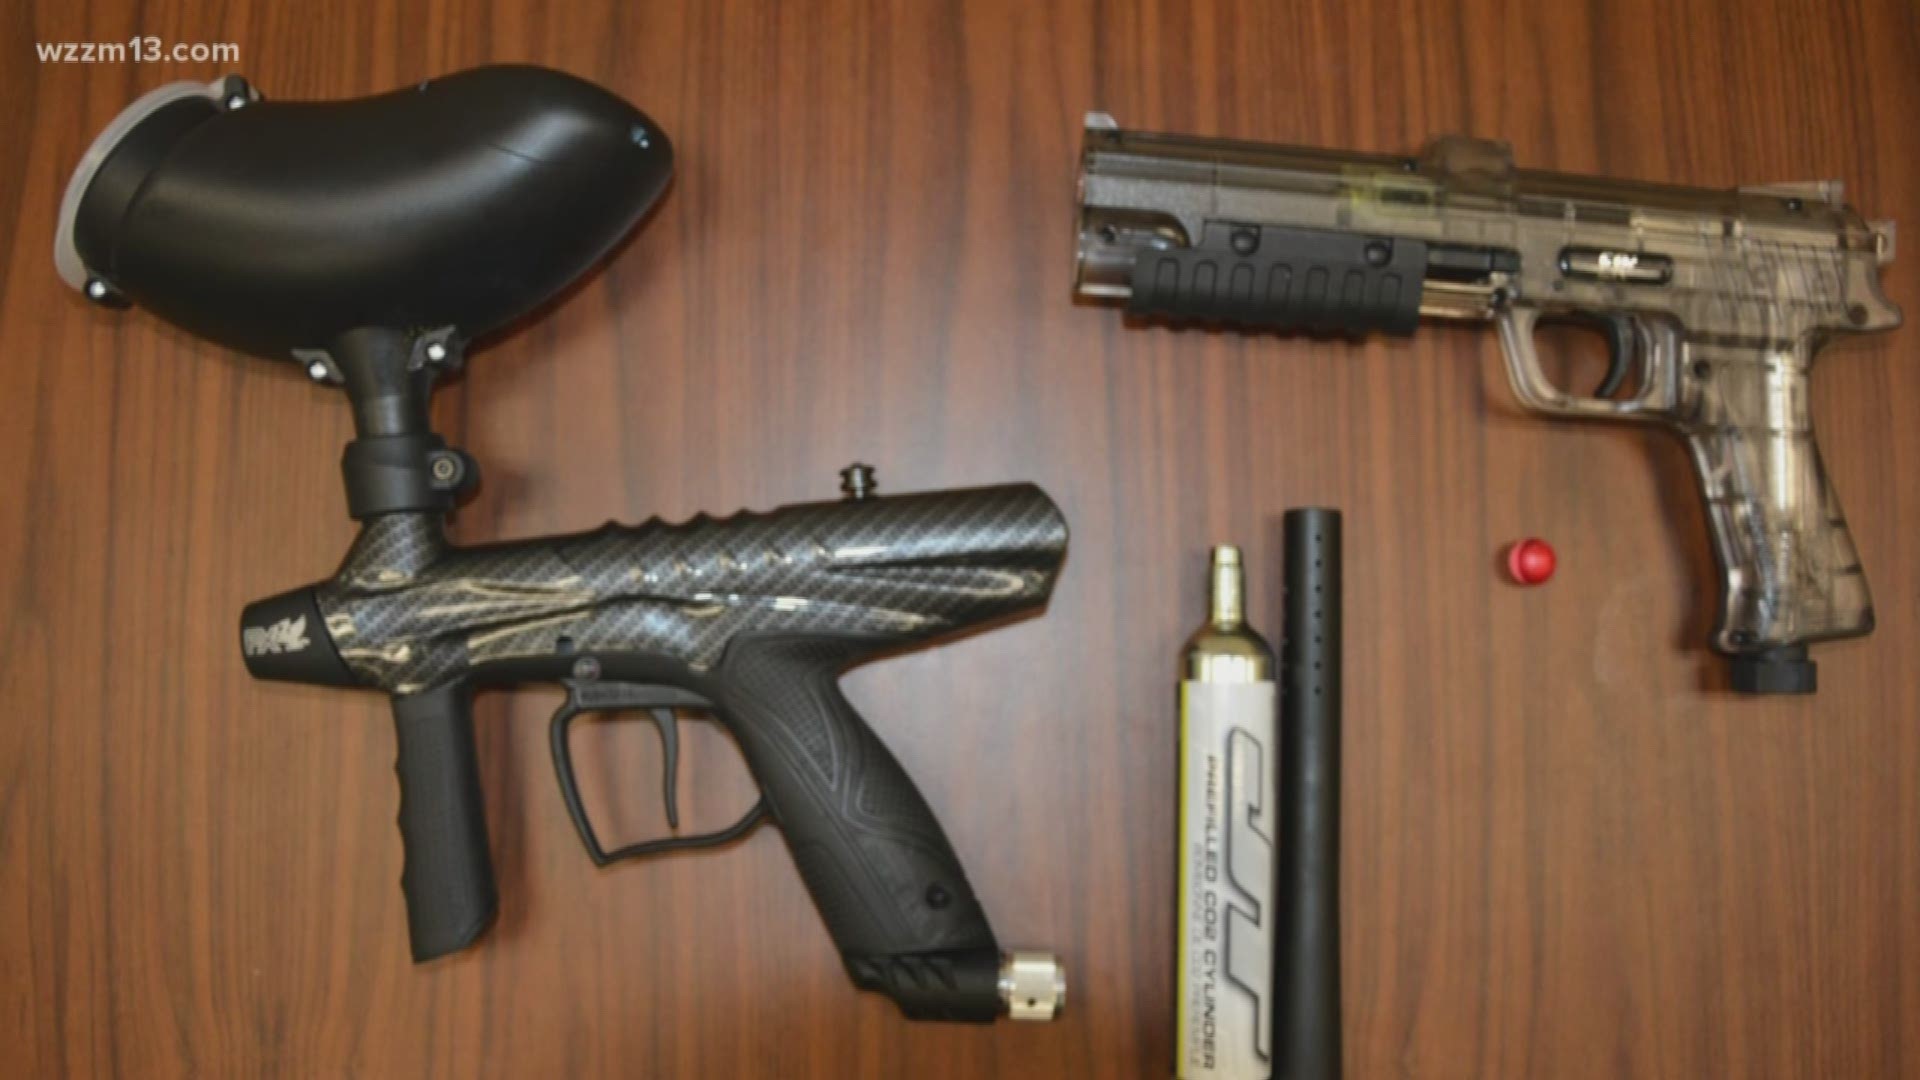 Paintball gun wars in Grand Rapids